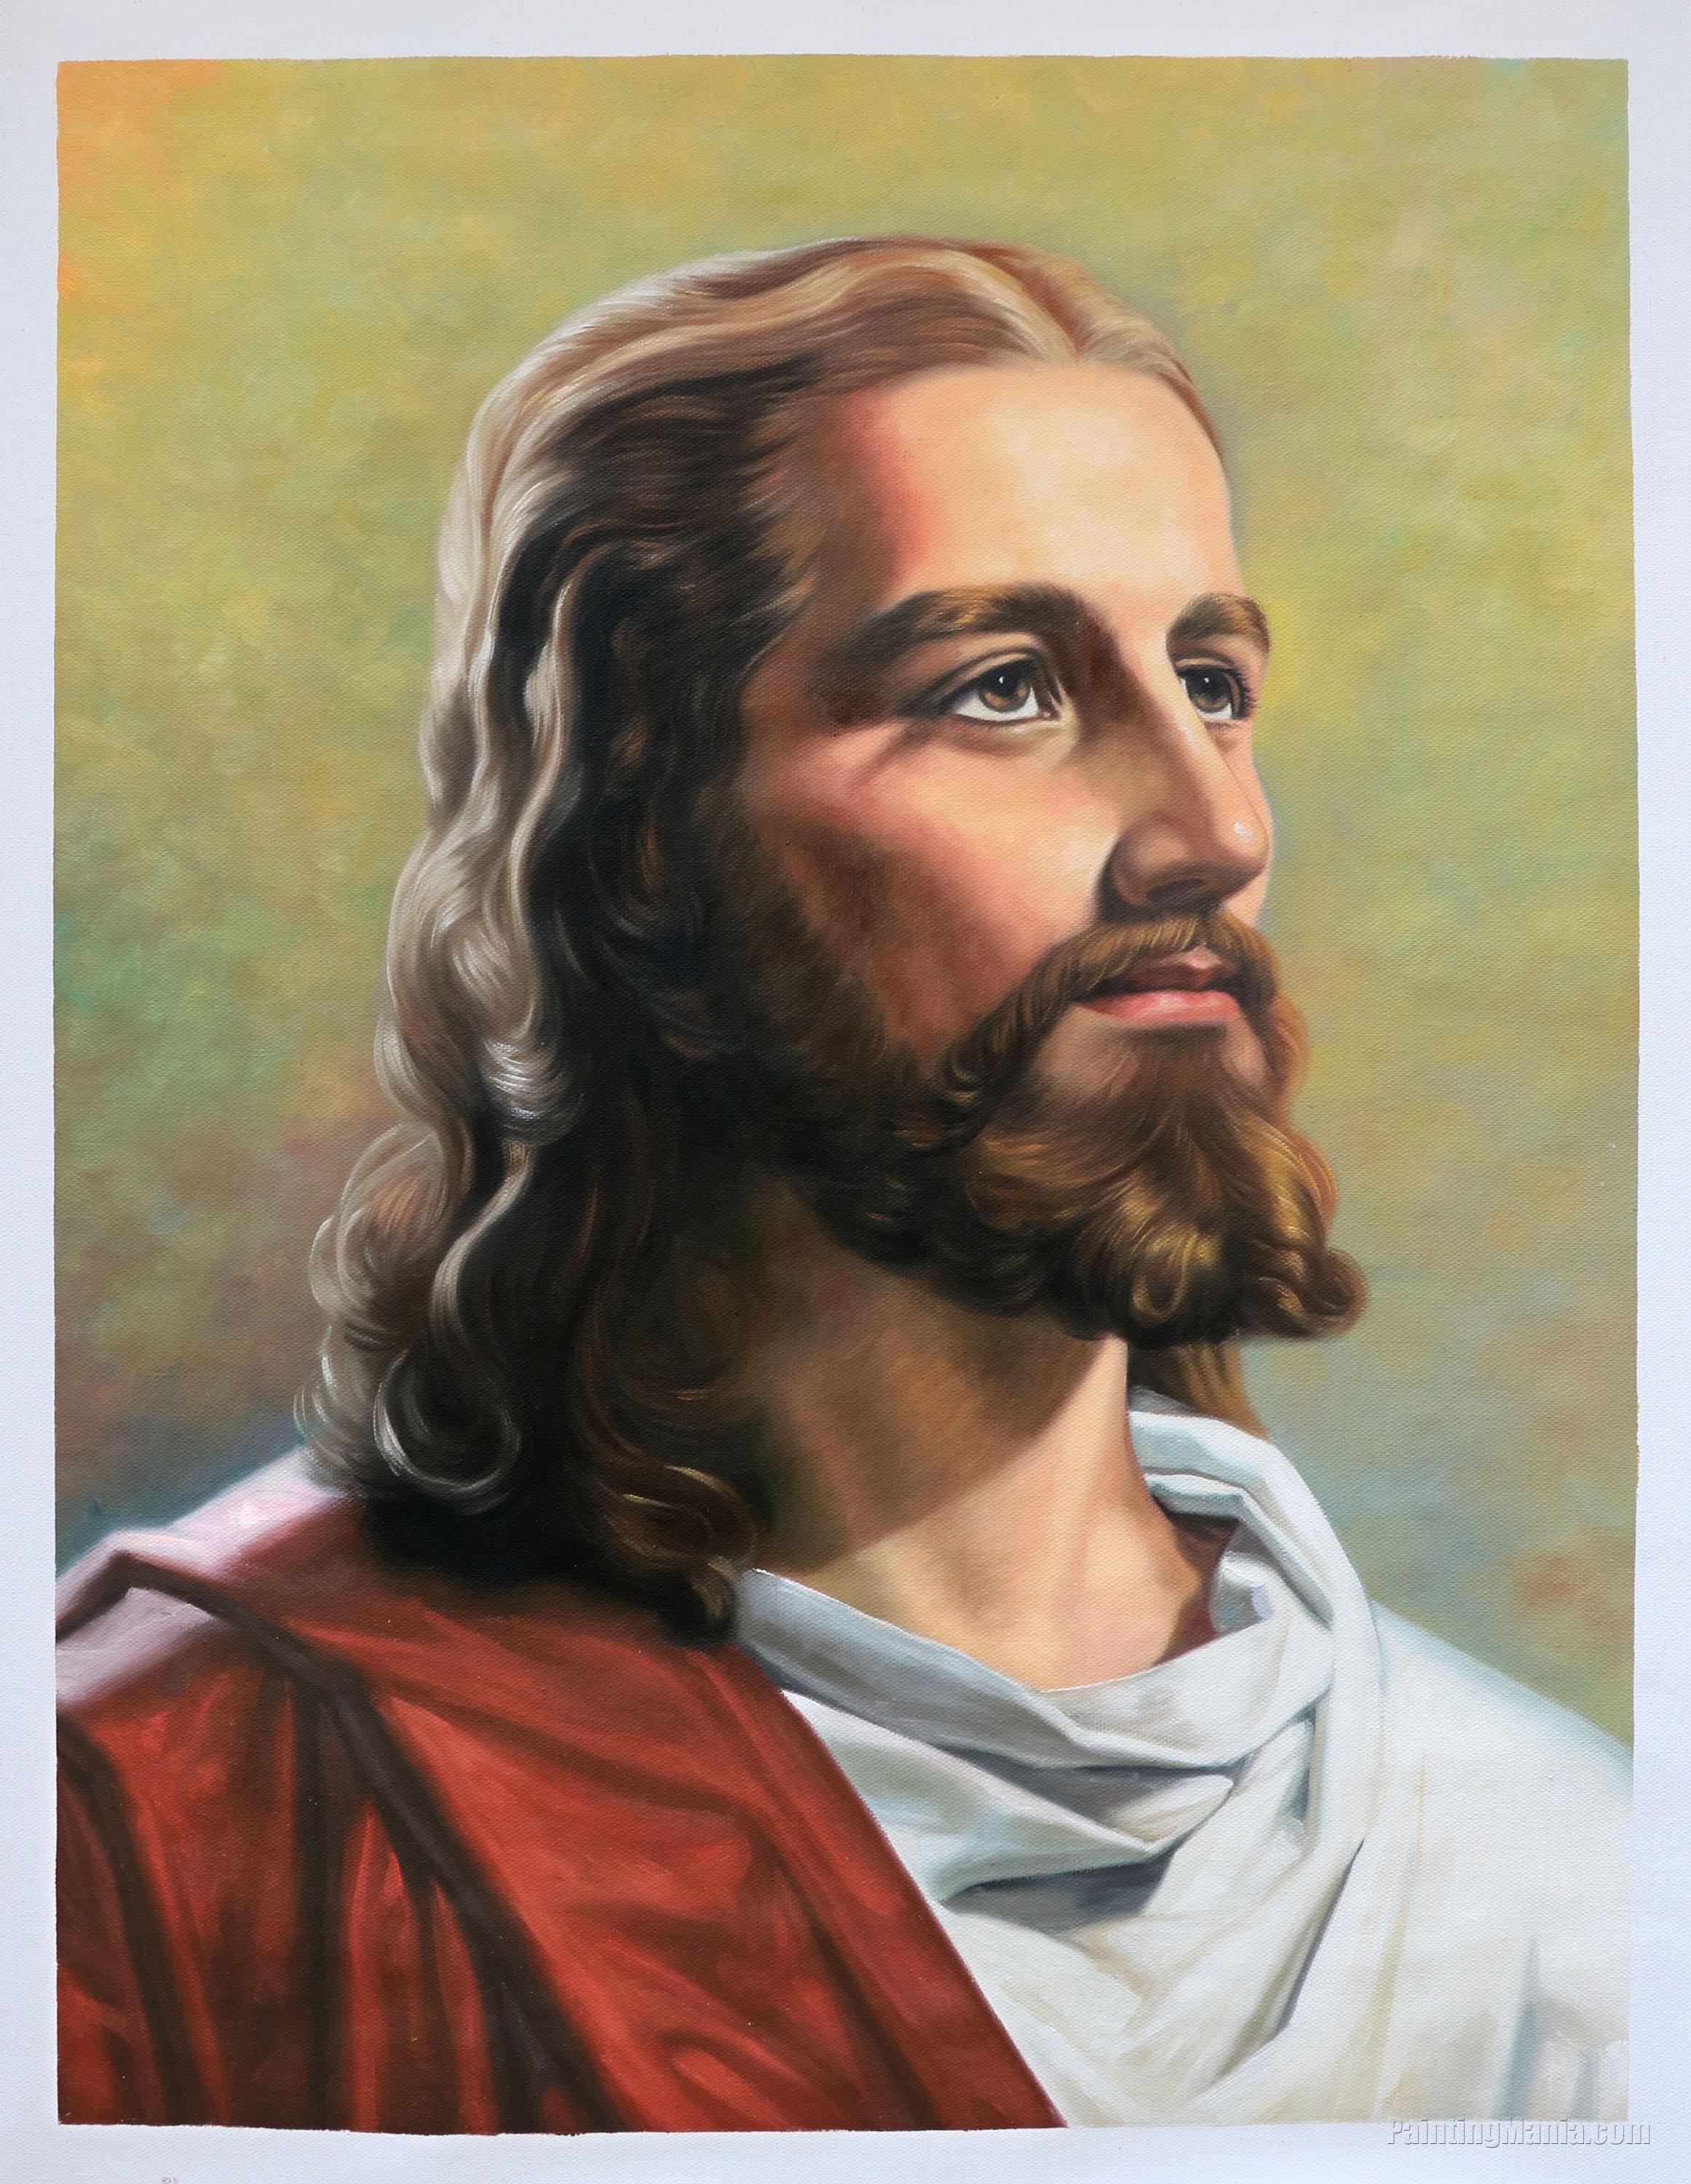 Jesus Christ Face - photos and vectors